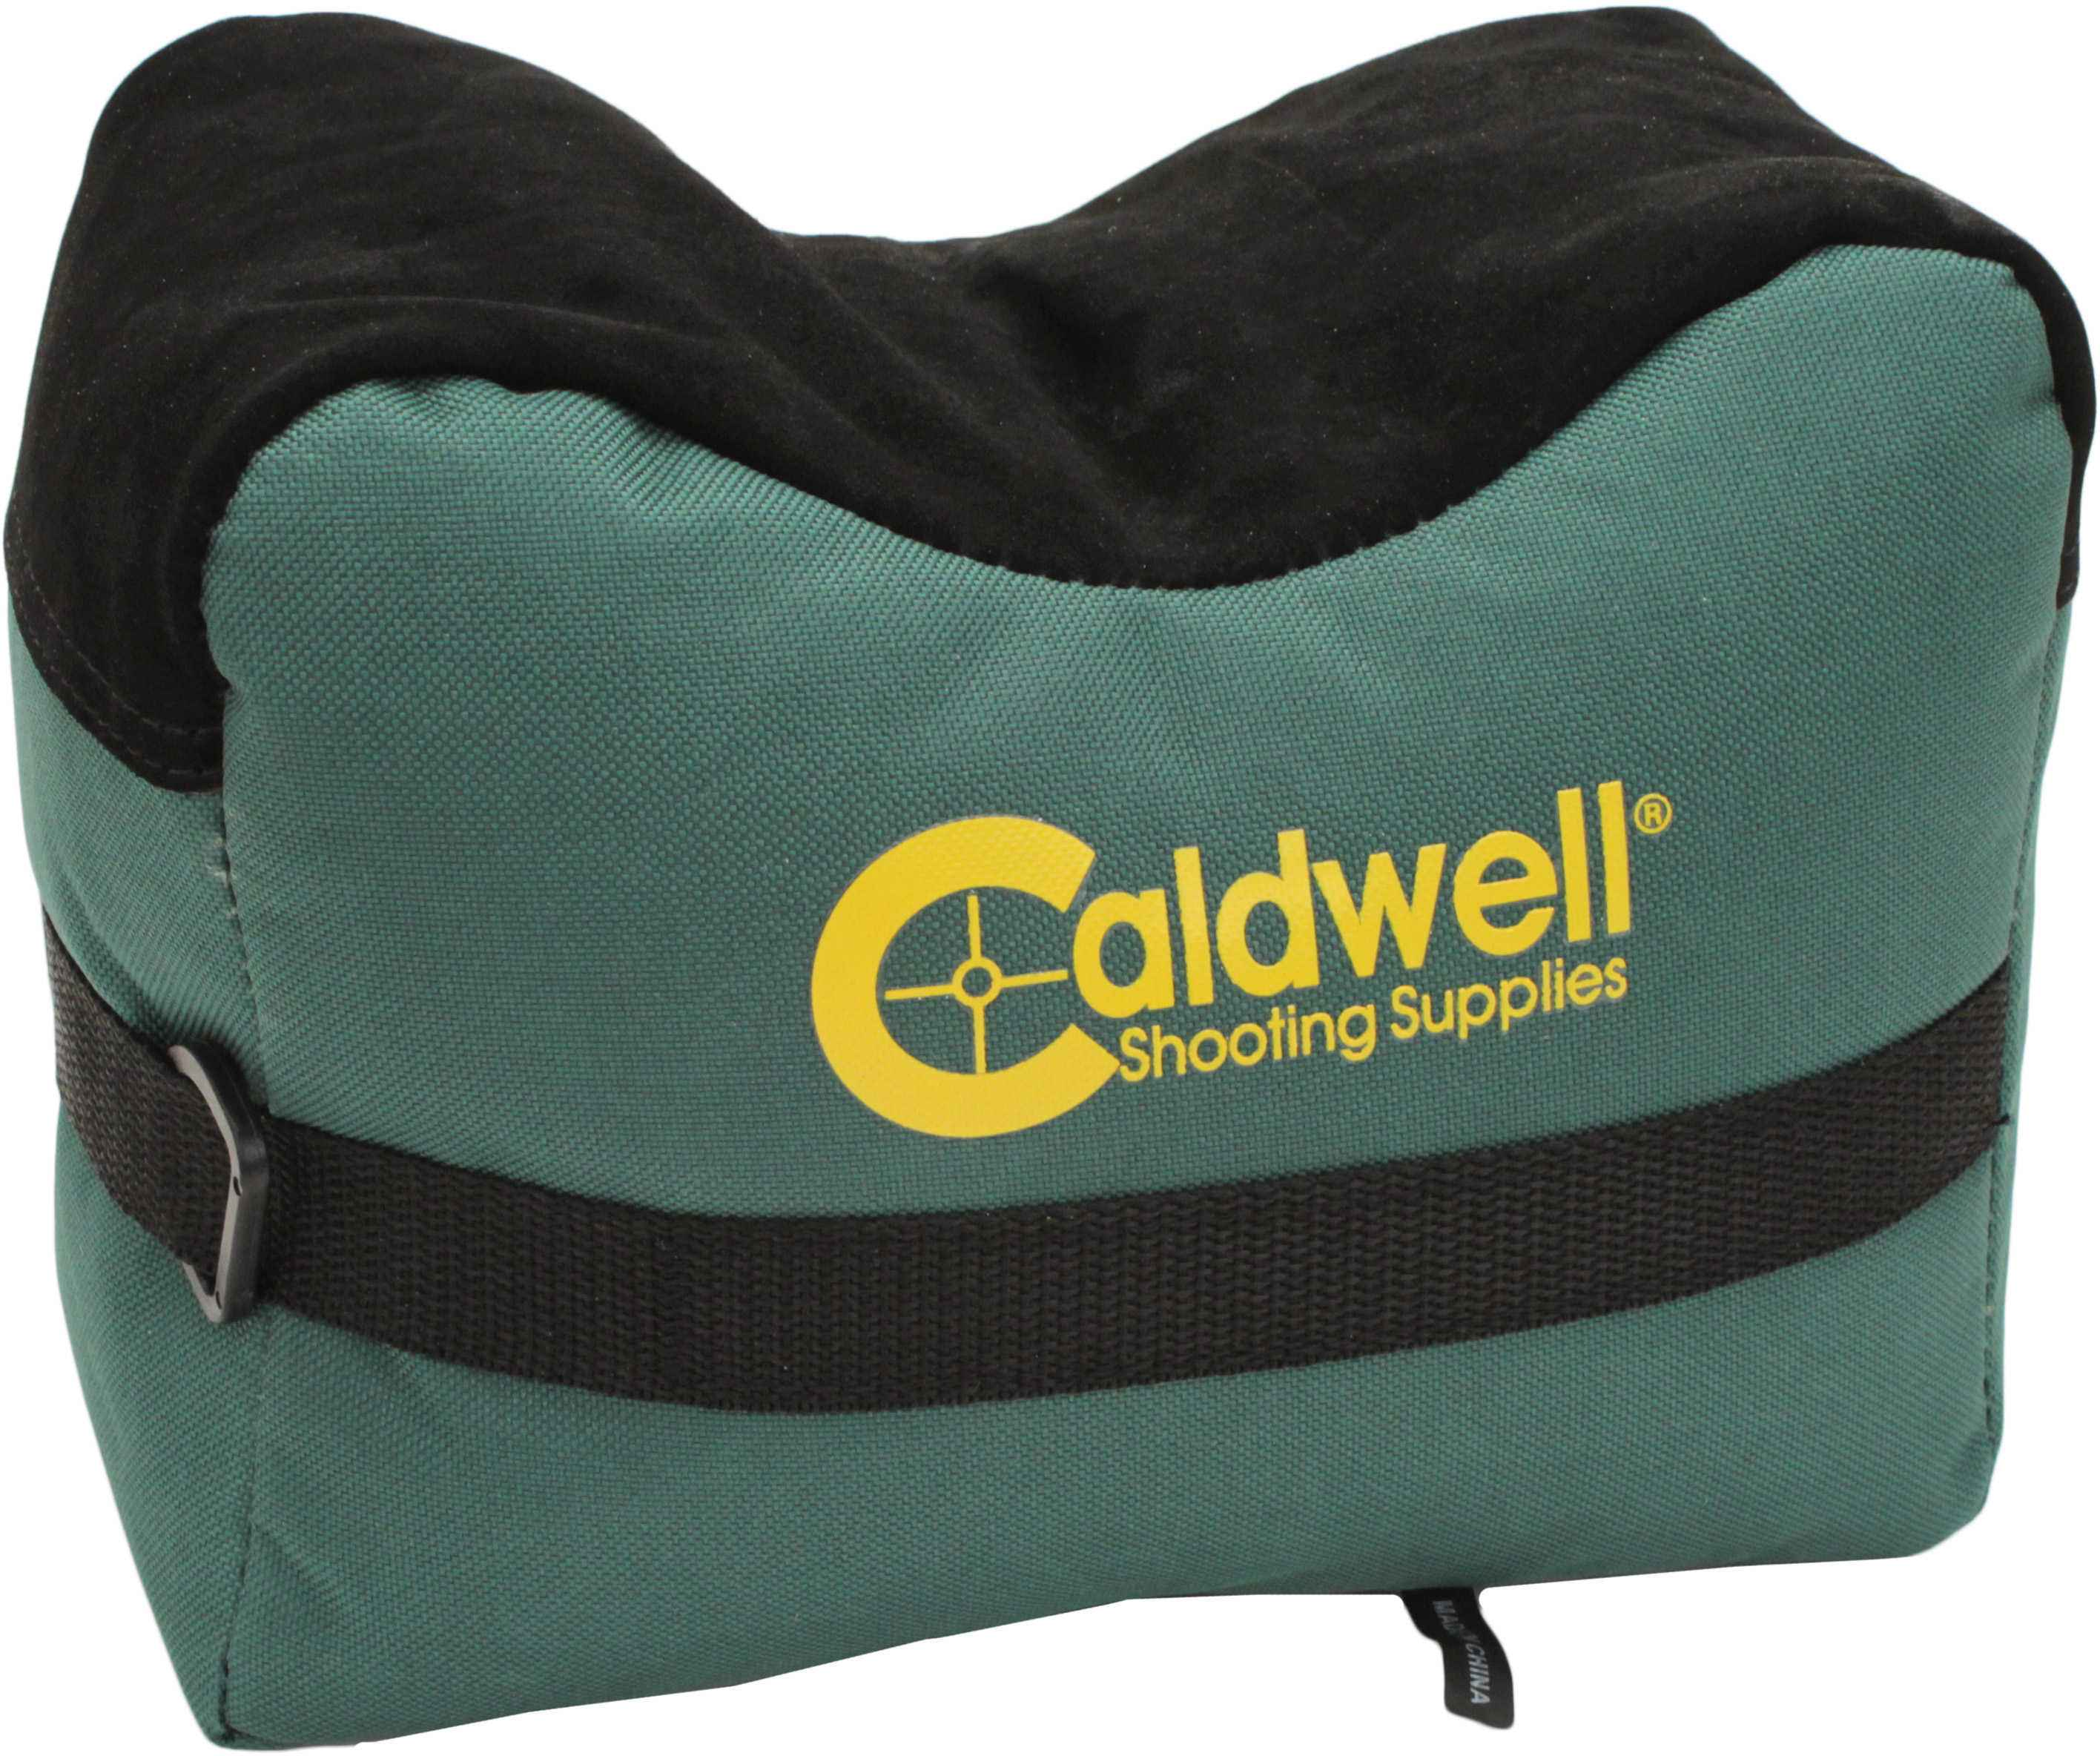 Caldwell Dead Shooting Front Benchrest Bag Md: 516620